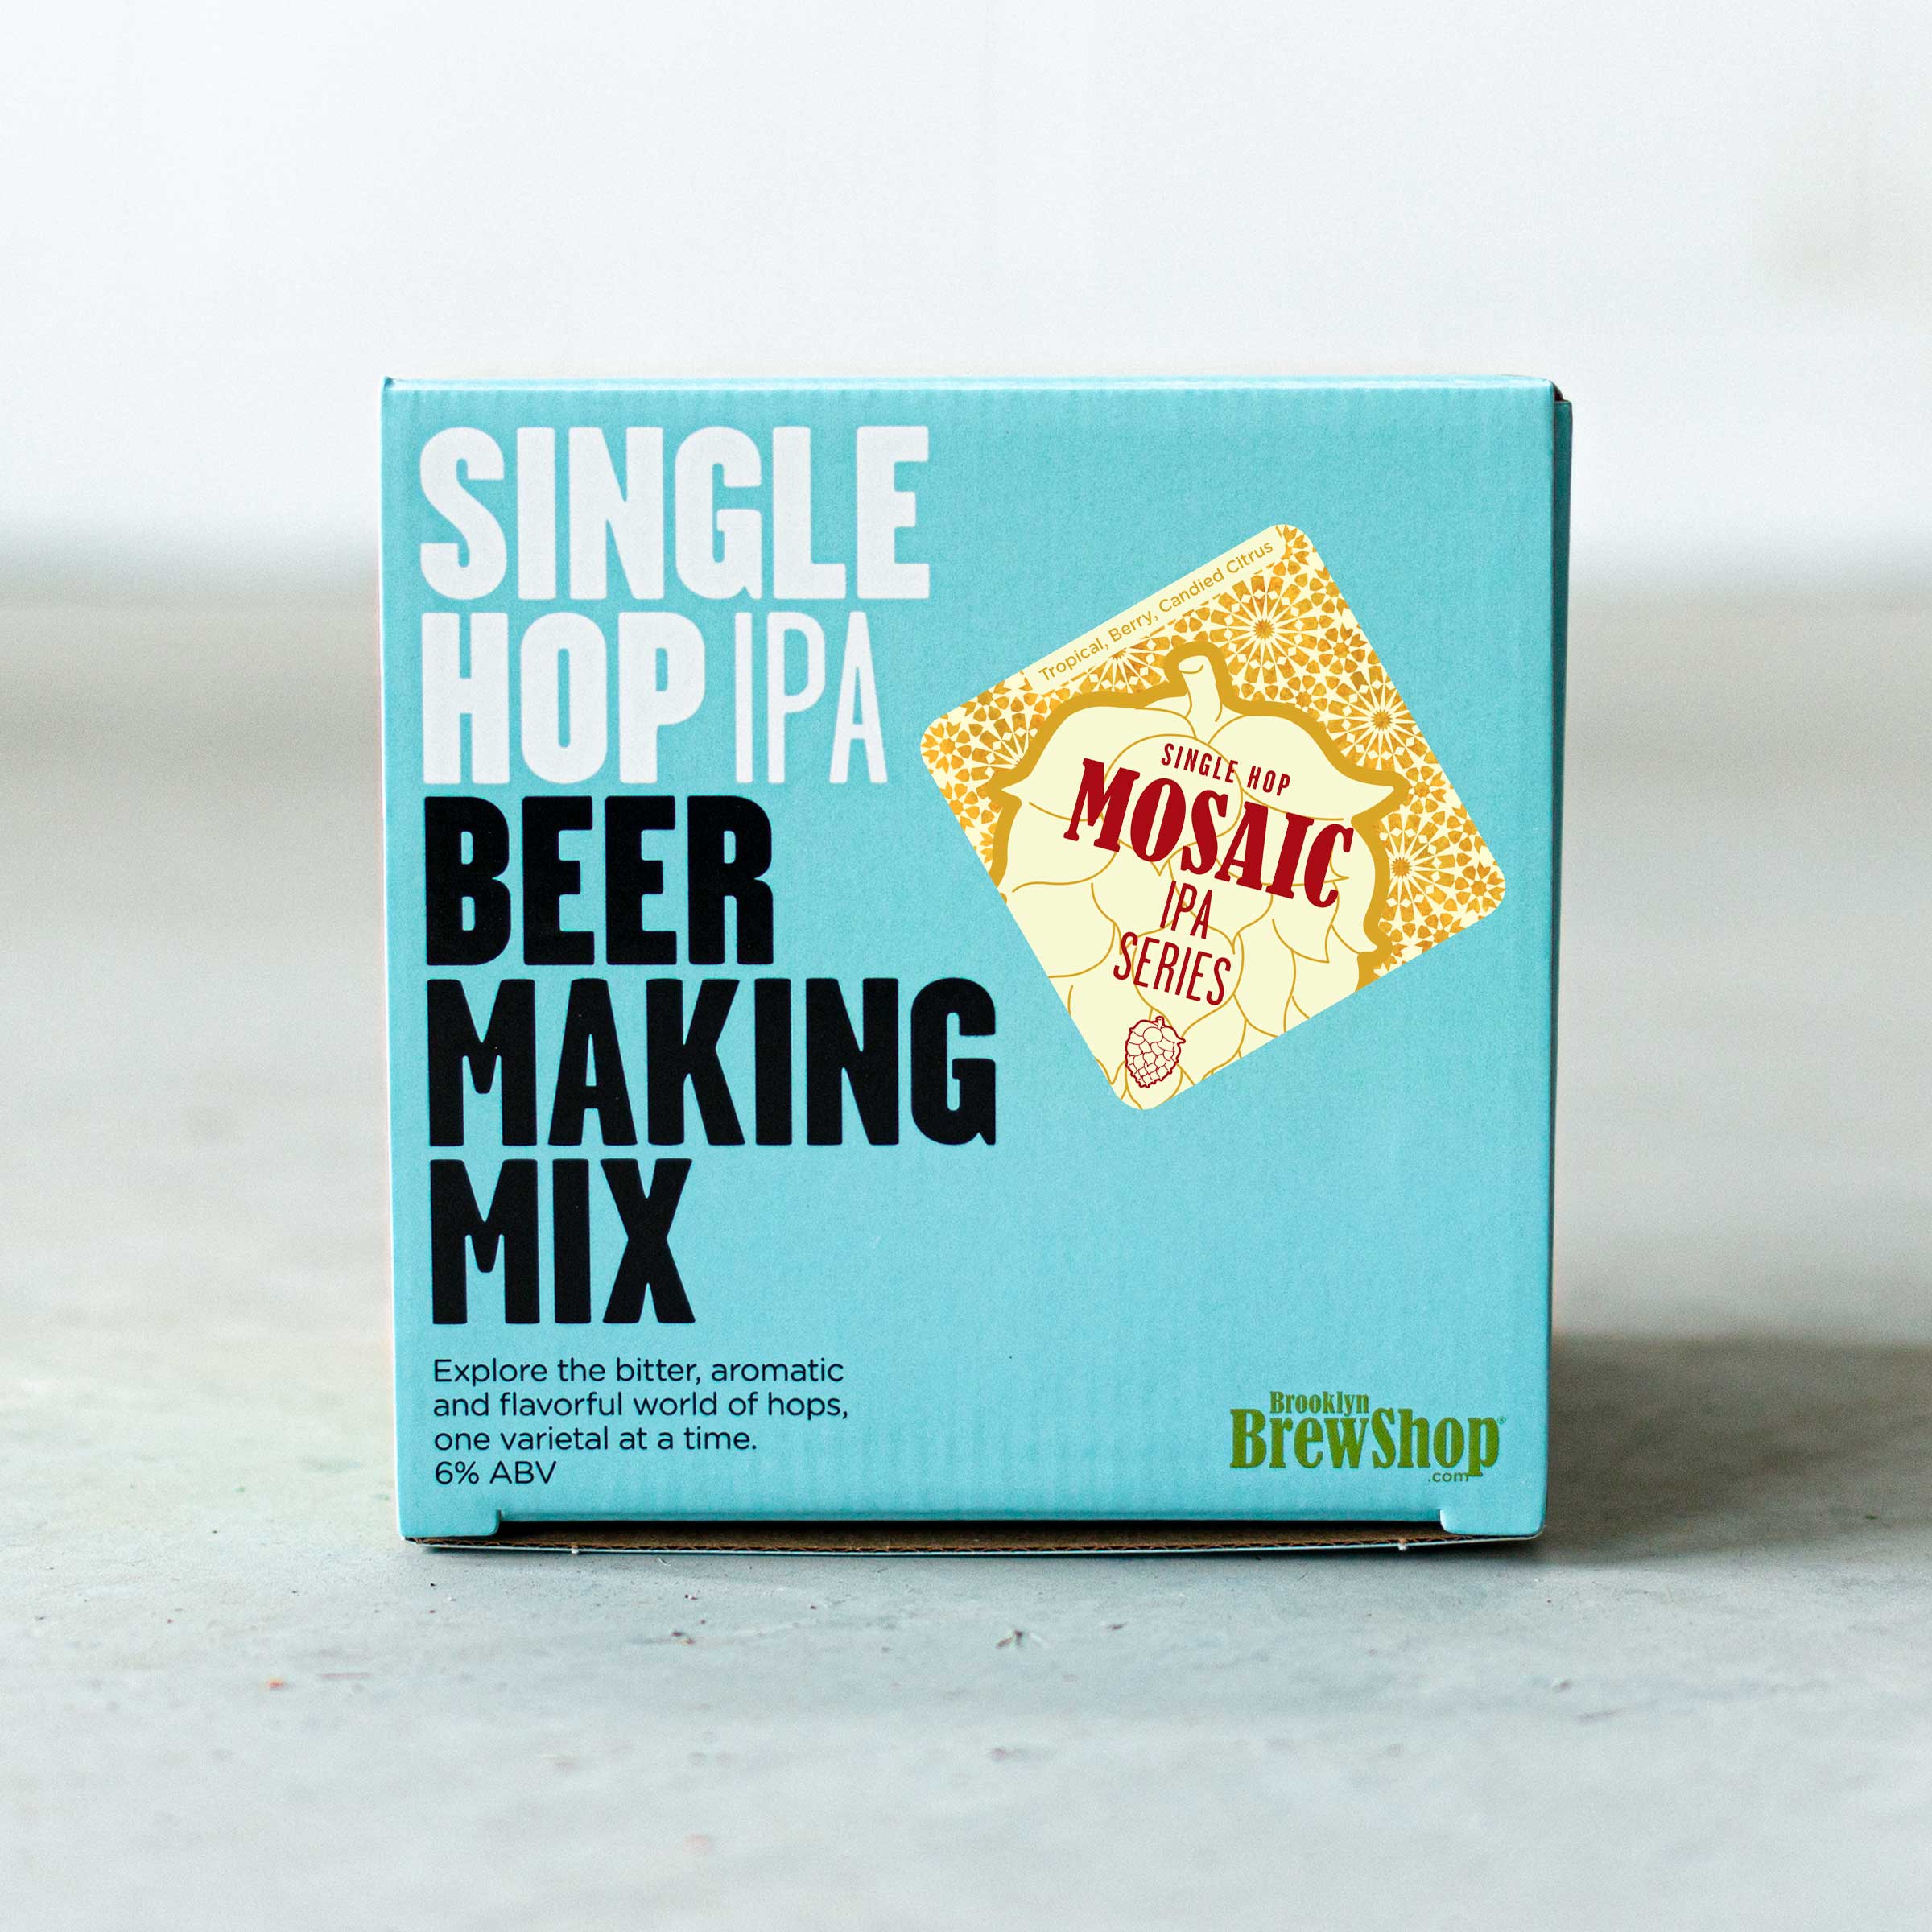 Image of Mosaic Single Hop IPA: Beer Making Mix